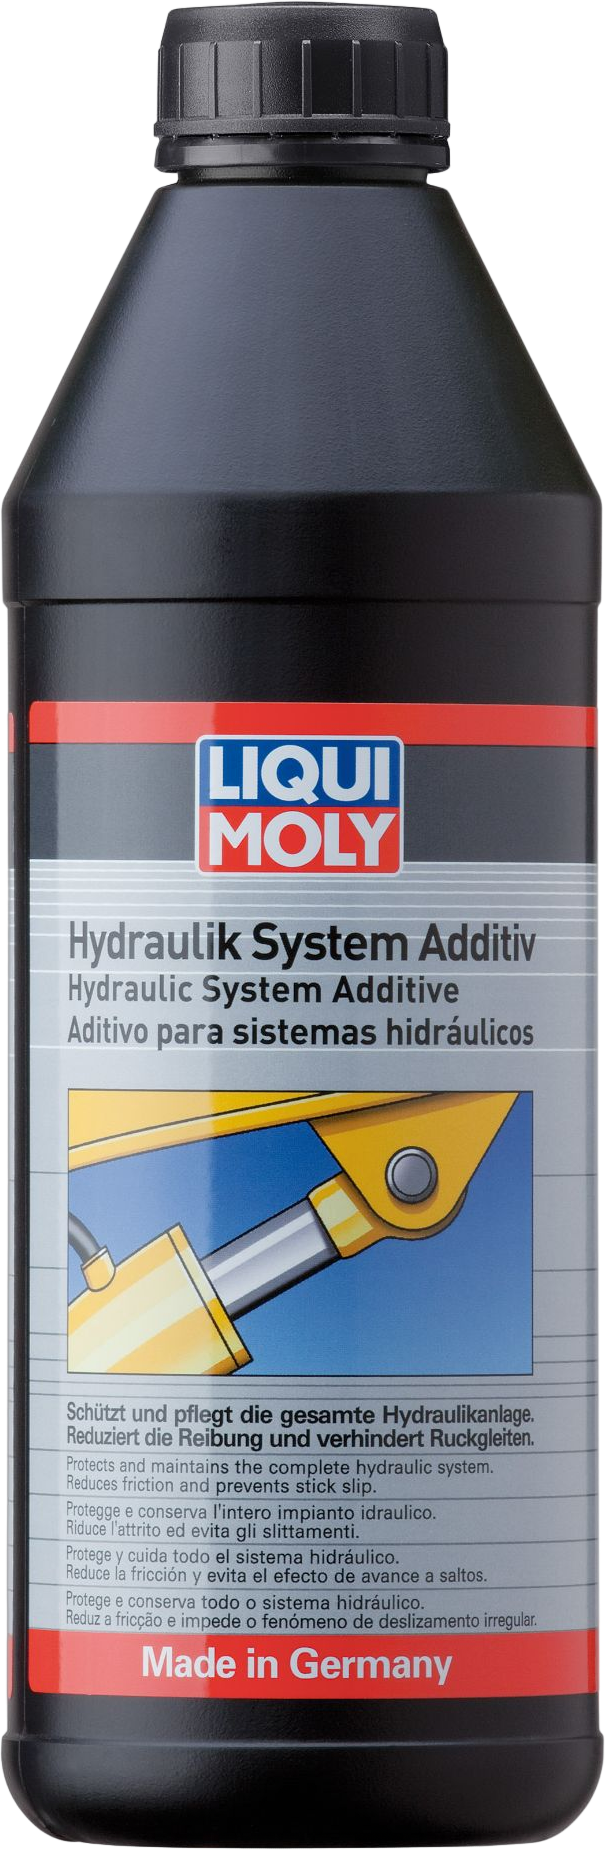 Liqui Moly Additief voor Hydraulieksysteem, 1 lt